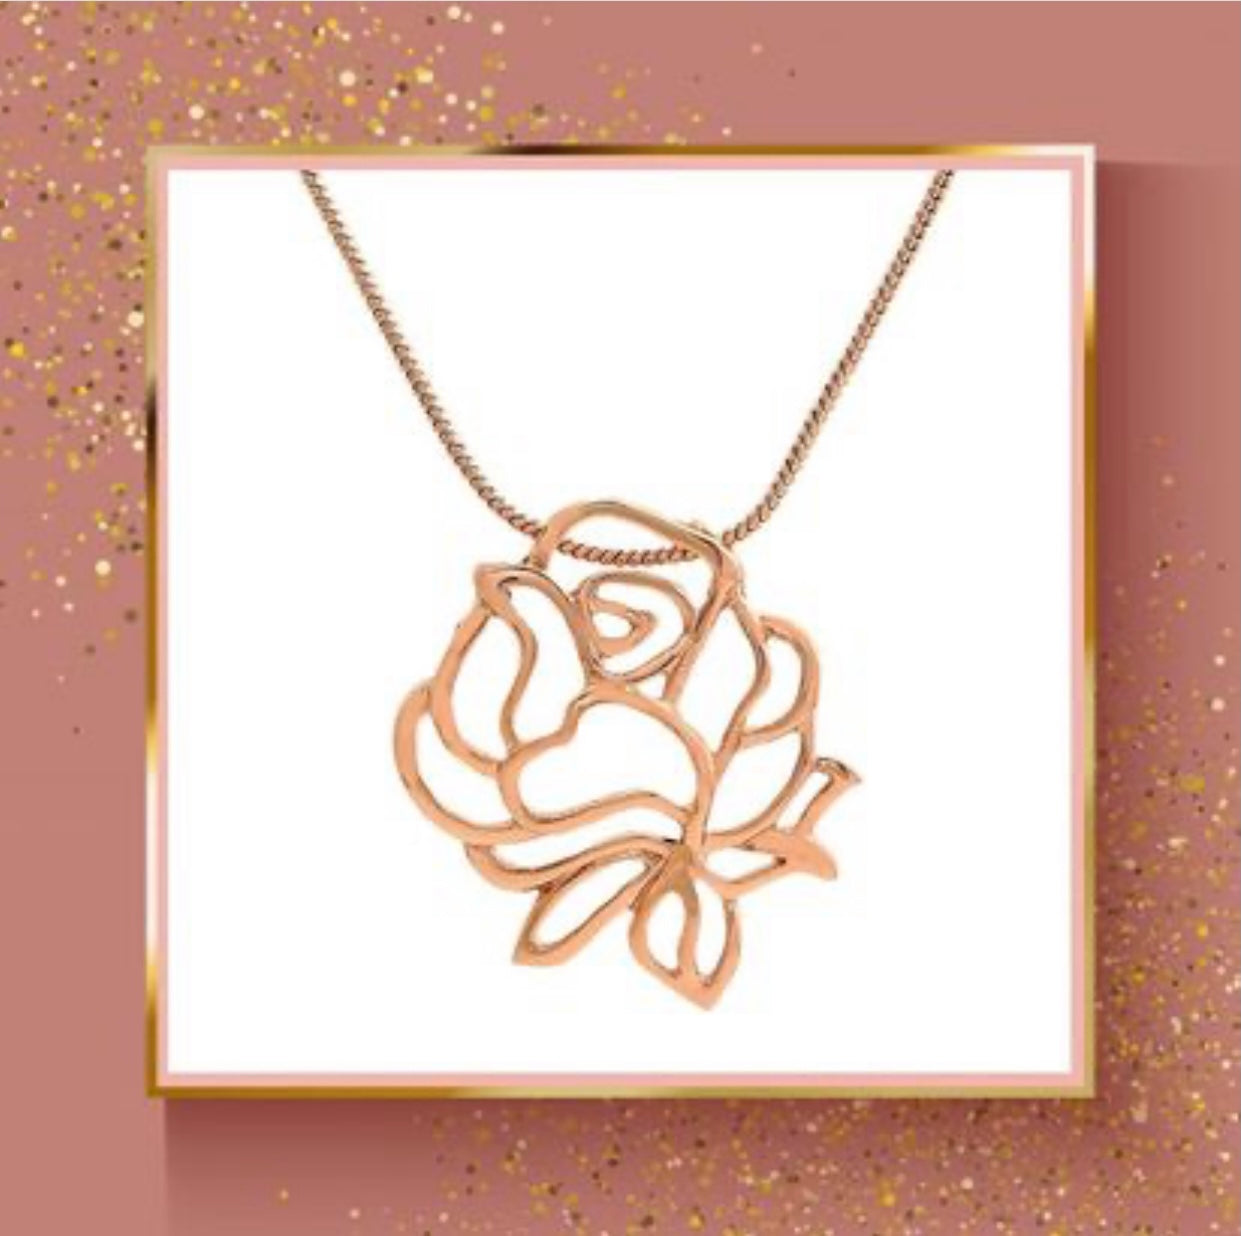 Estele - 24 Kt Rose Gold Plated FLOWER Pendant Set for women